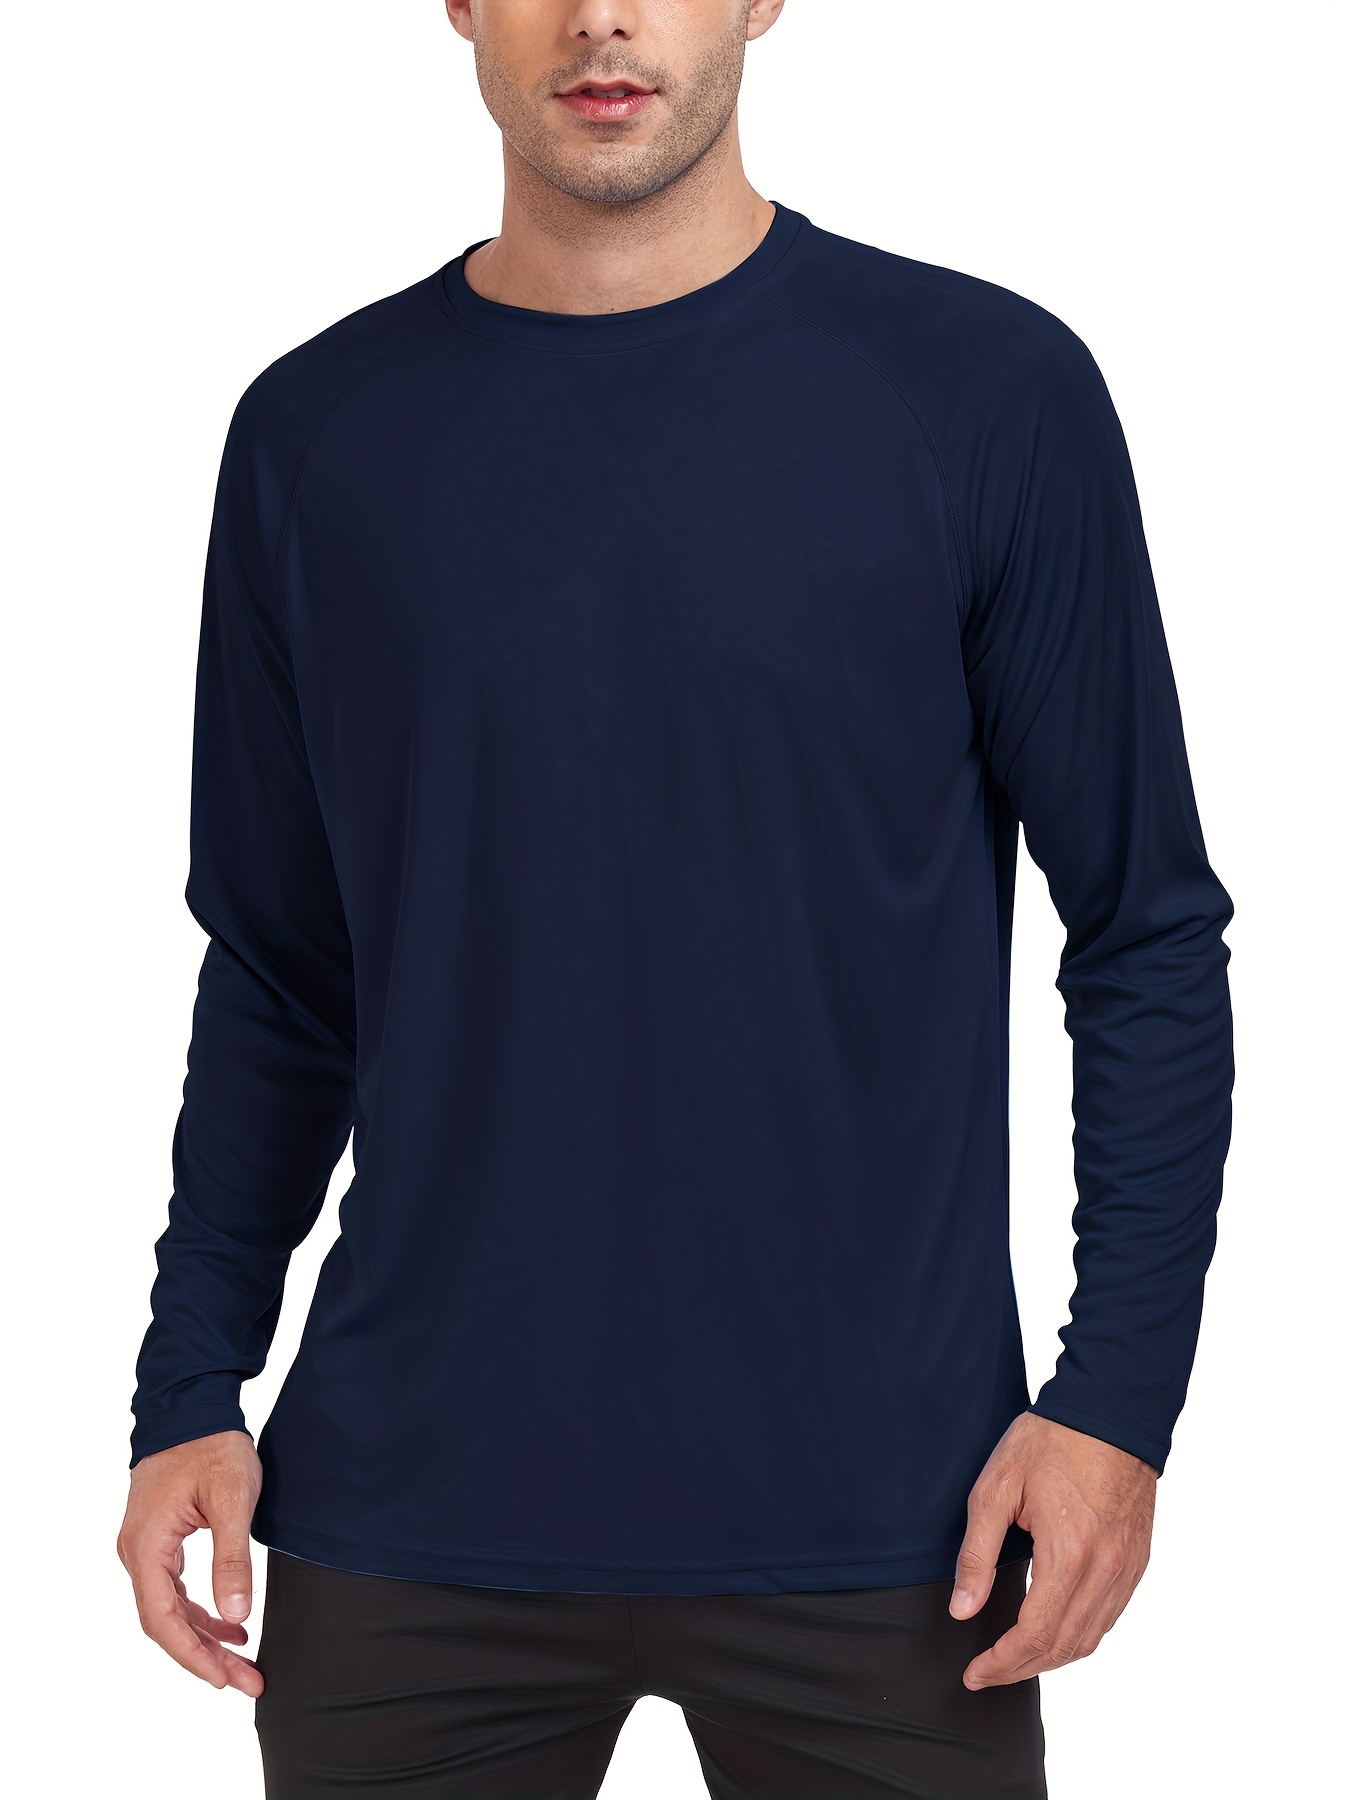 Moisture Wicking Shirt - UPF 50 - Long Sleeve - Navy/White X-Large / Navy